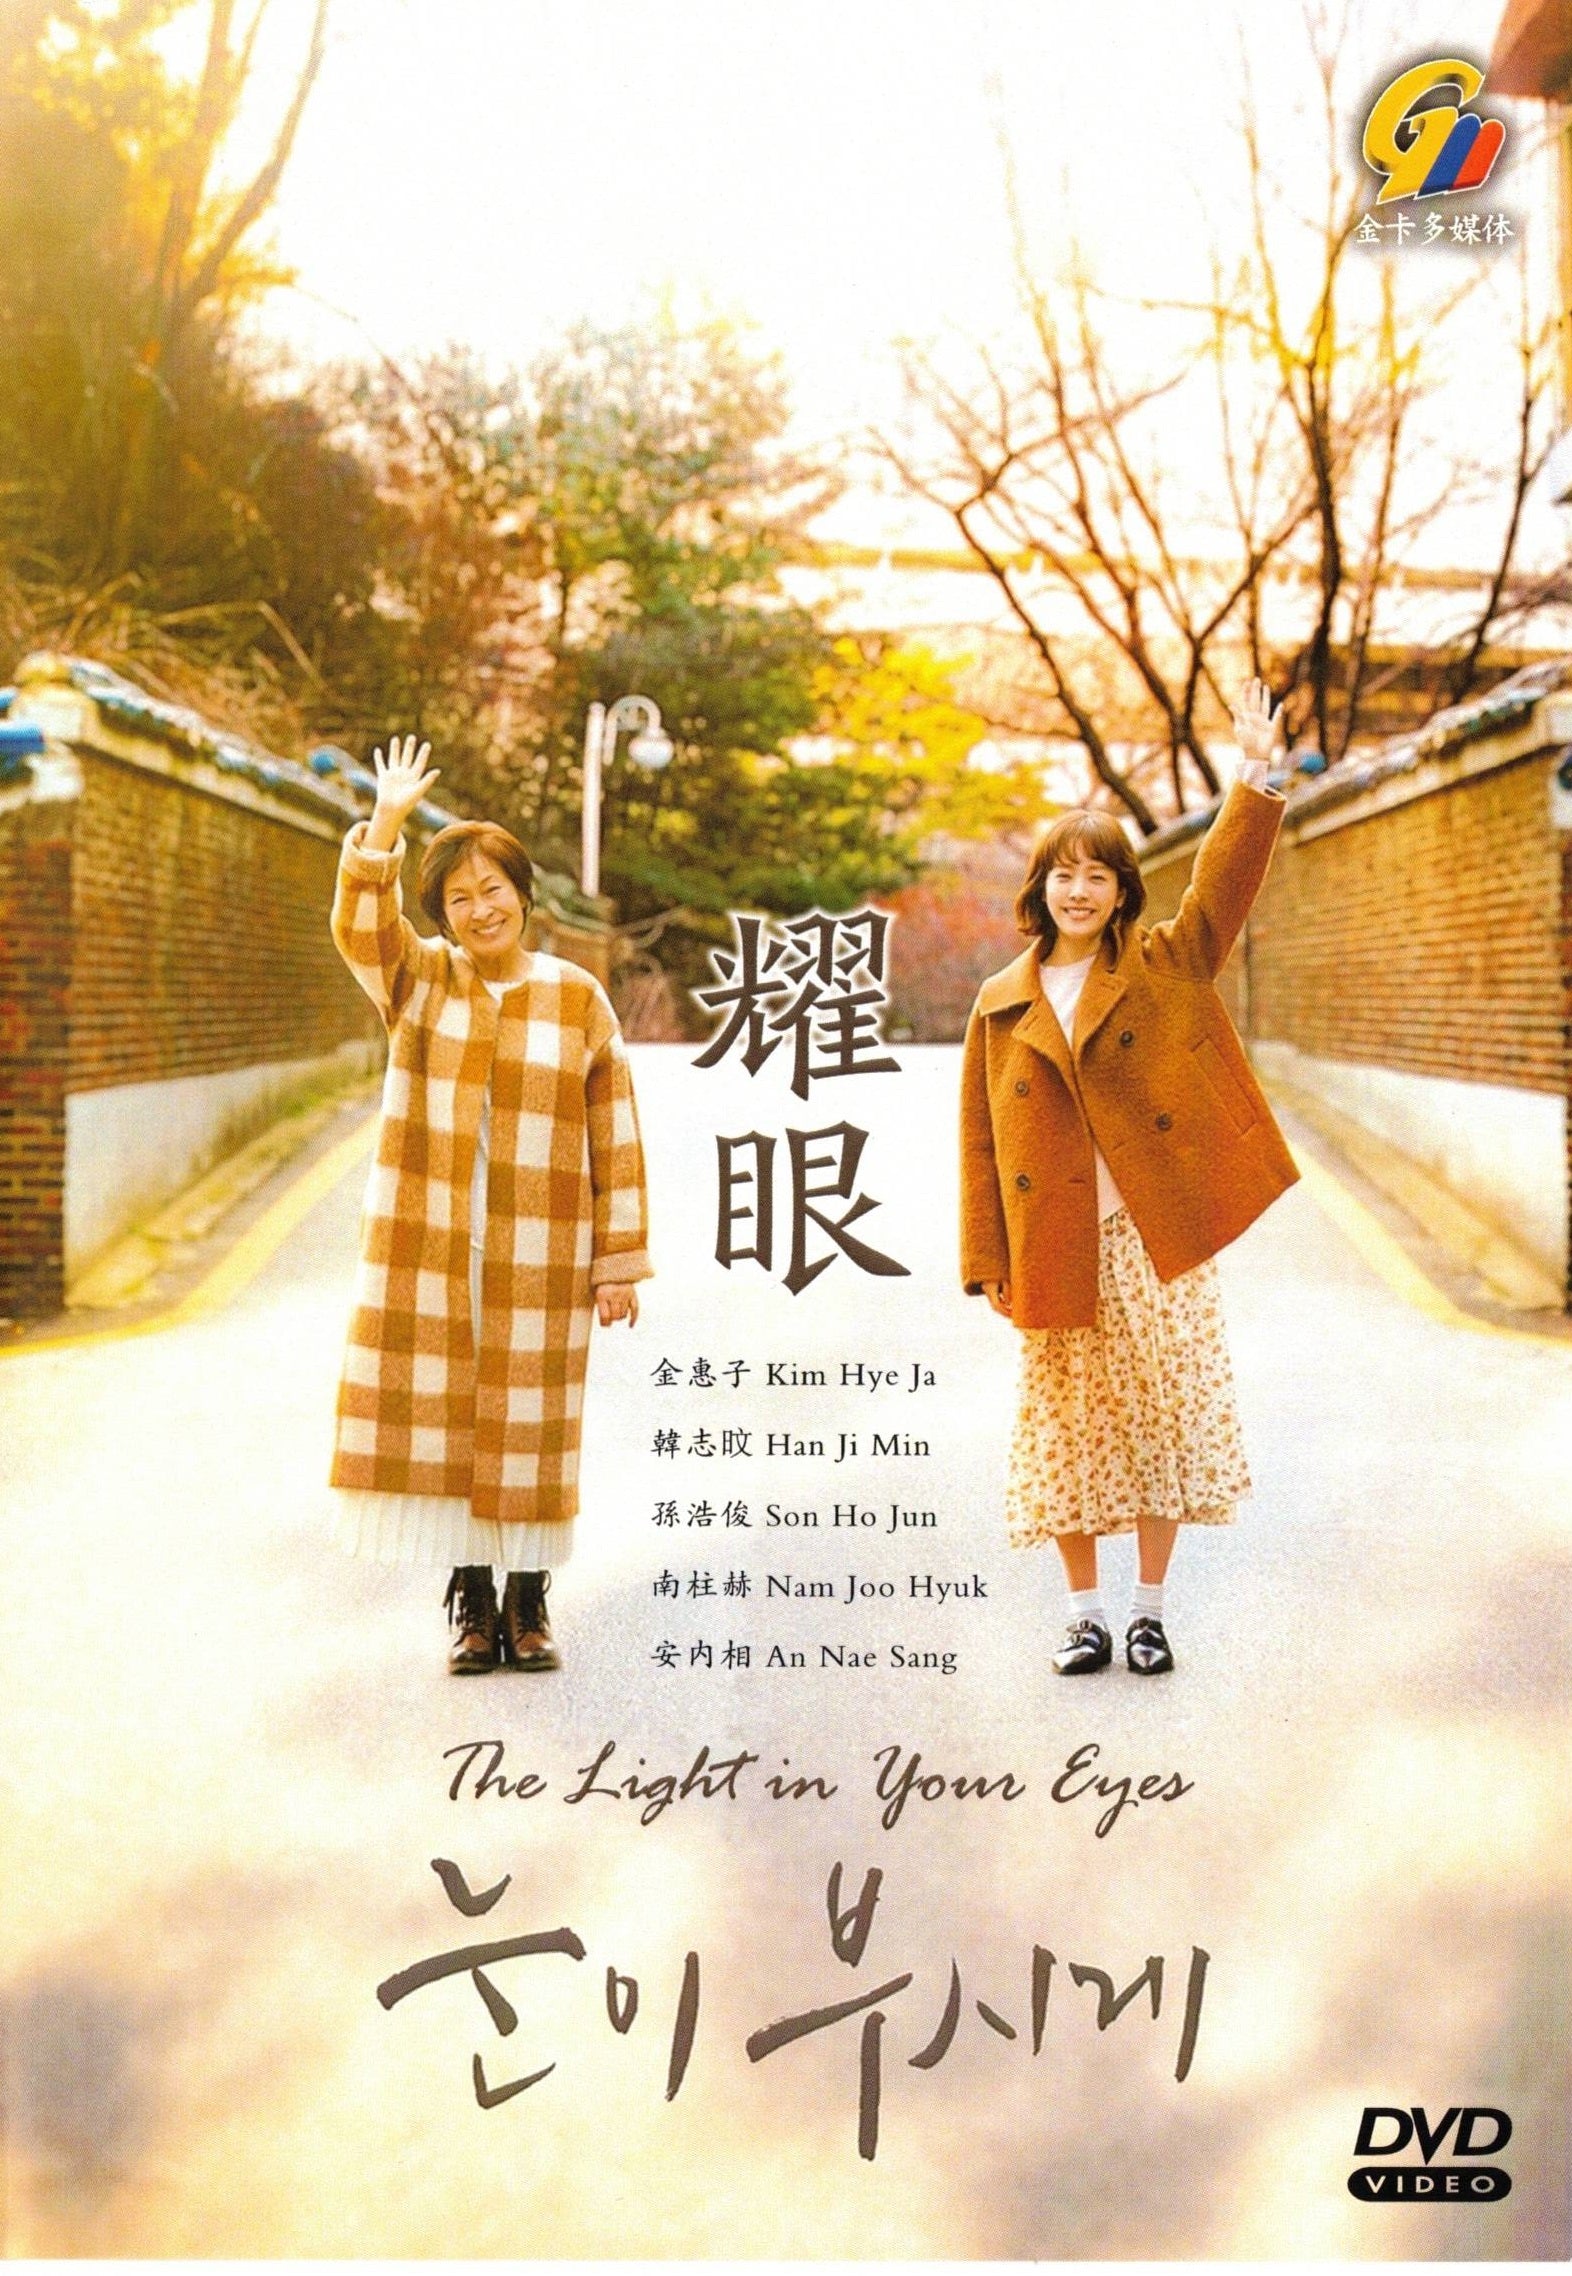 K - Drama DVD:  THE LIGHT IN YOUR EYES Korean Drama DVD - TV Series (NTSC)